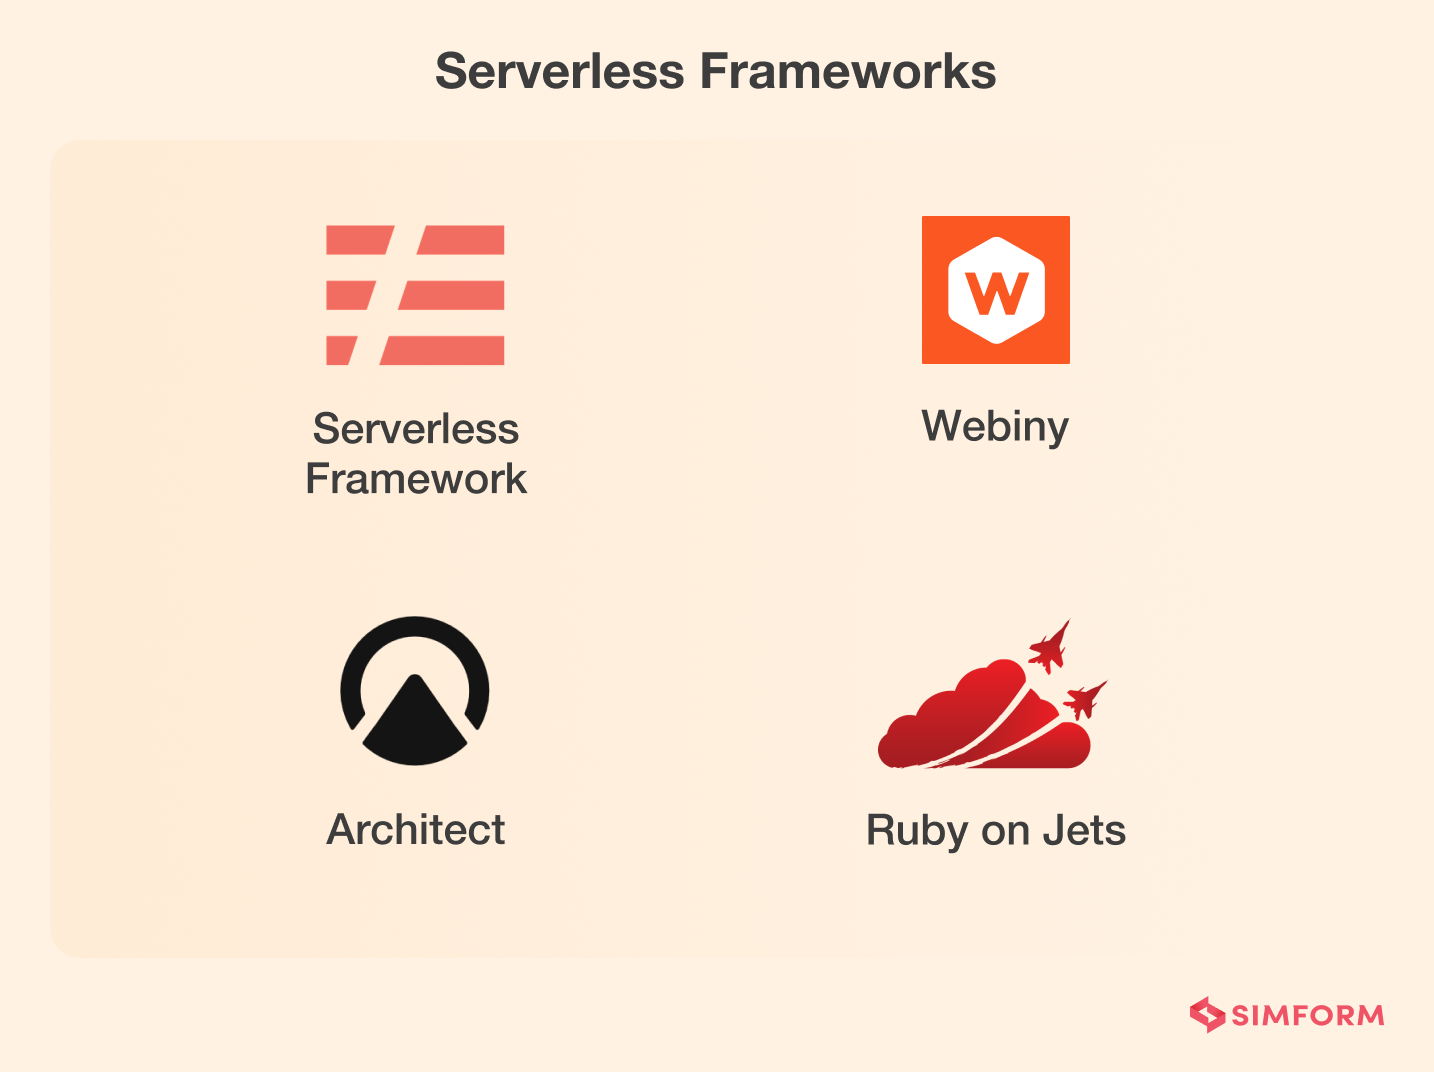 Serverless frameworks